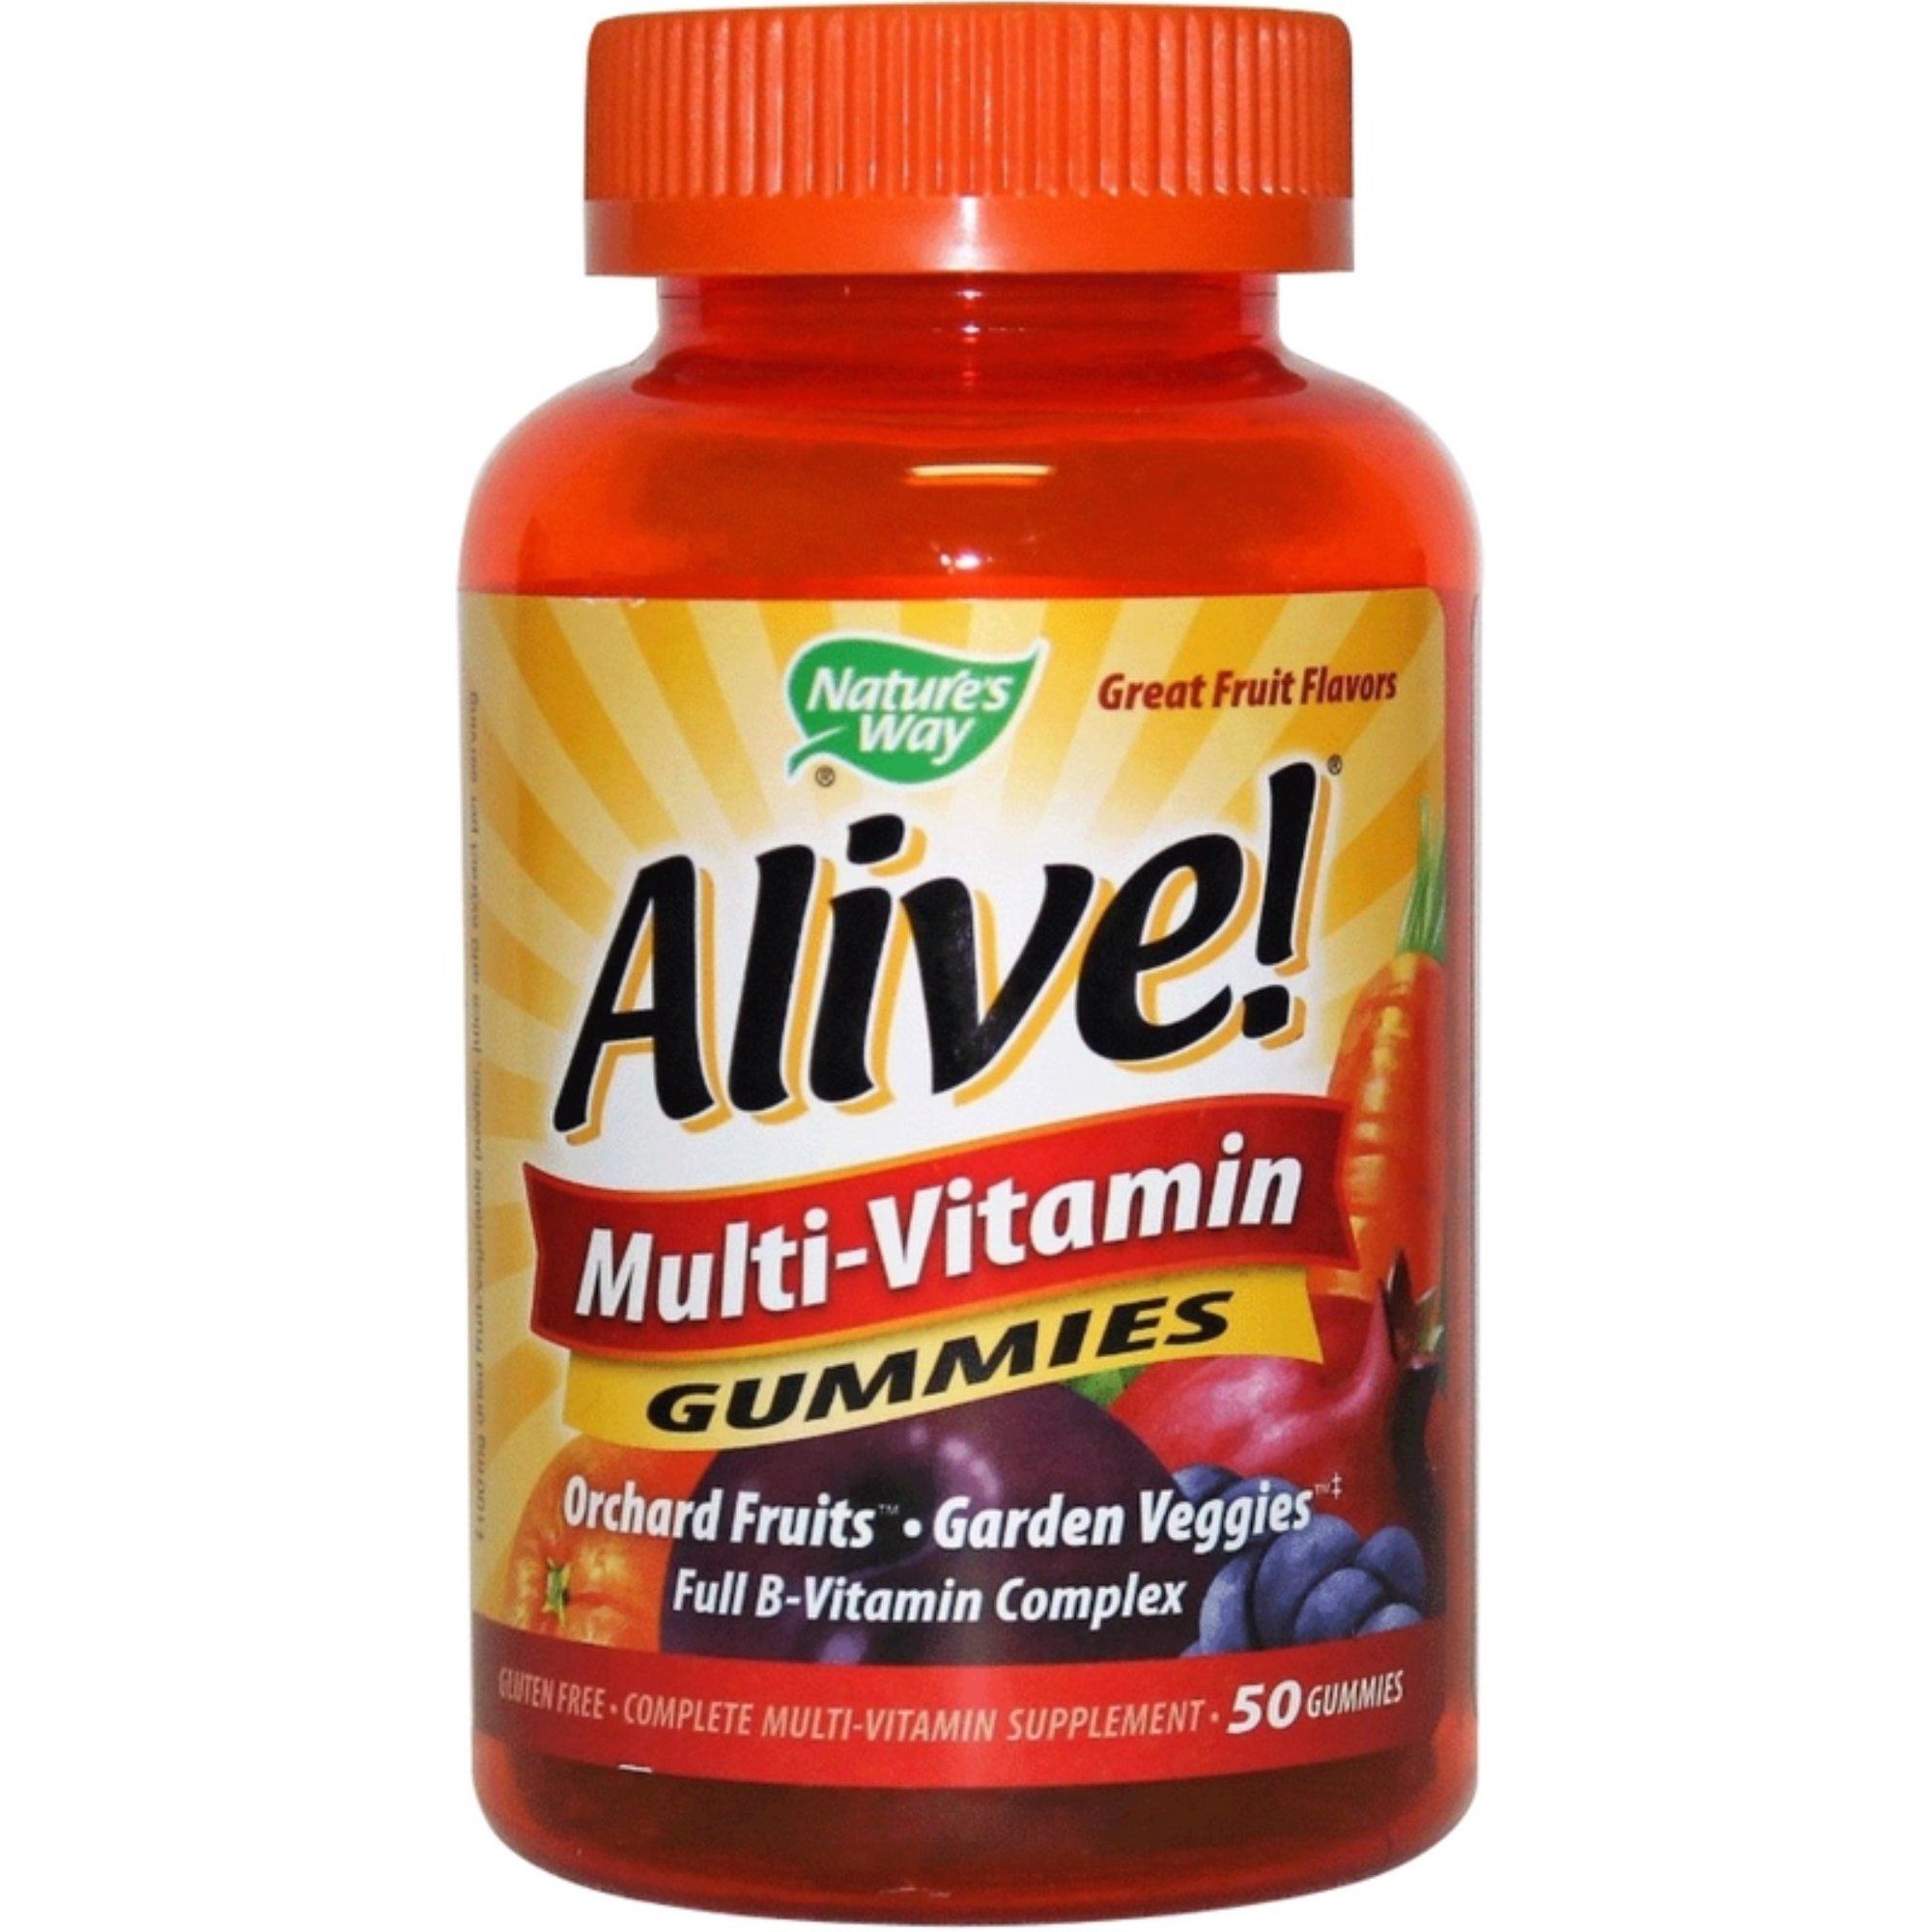 Nature's Way Alive! Multi-Vitamin Adult Gummies, Assorted Fruit Flavors - 50 ct